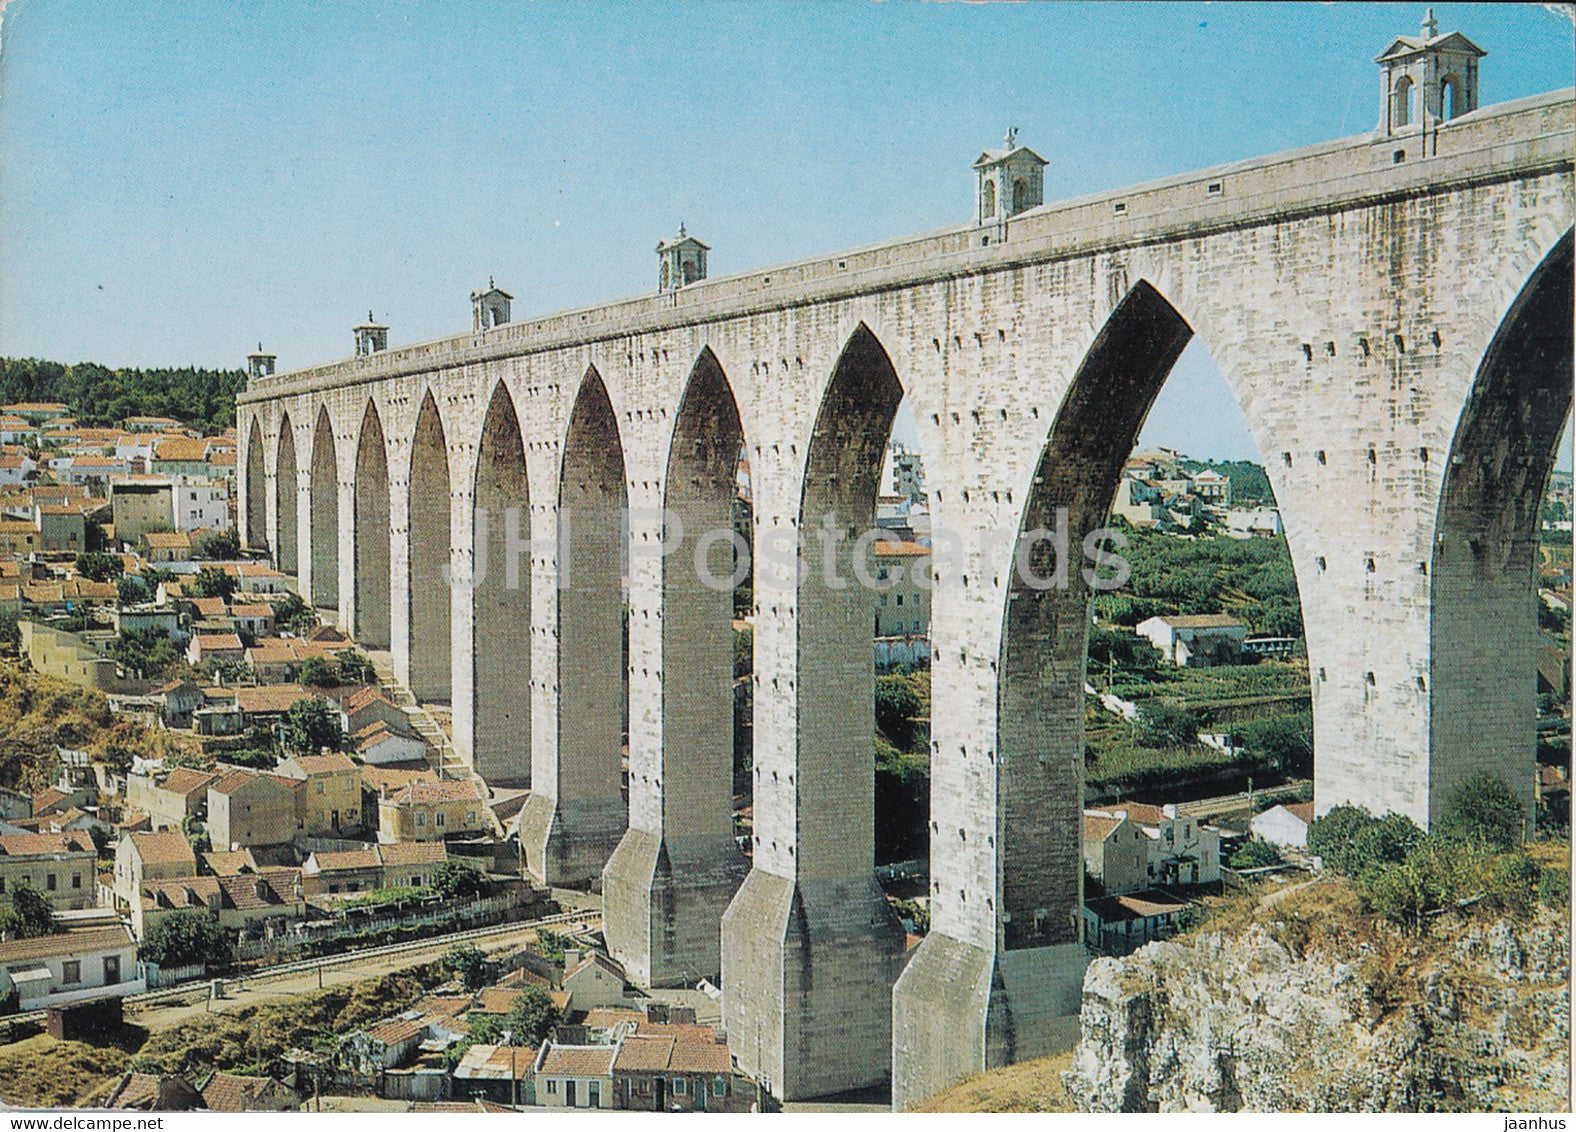 Aqueduto das Aguas Livres - Aquaduct of Lisbon - Lisboa - 1971 - Portugal - used - JH Postcards